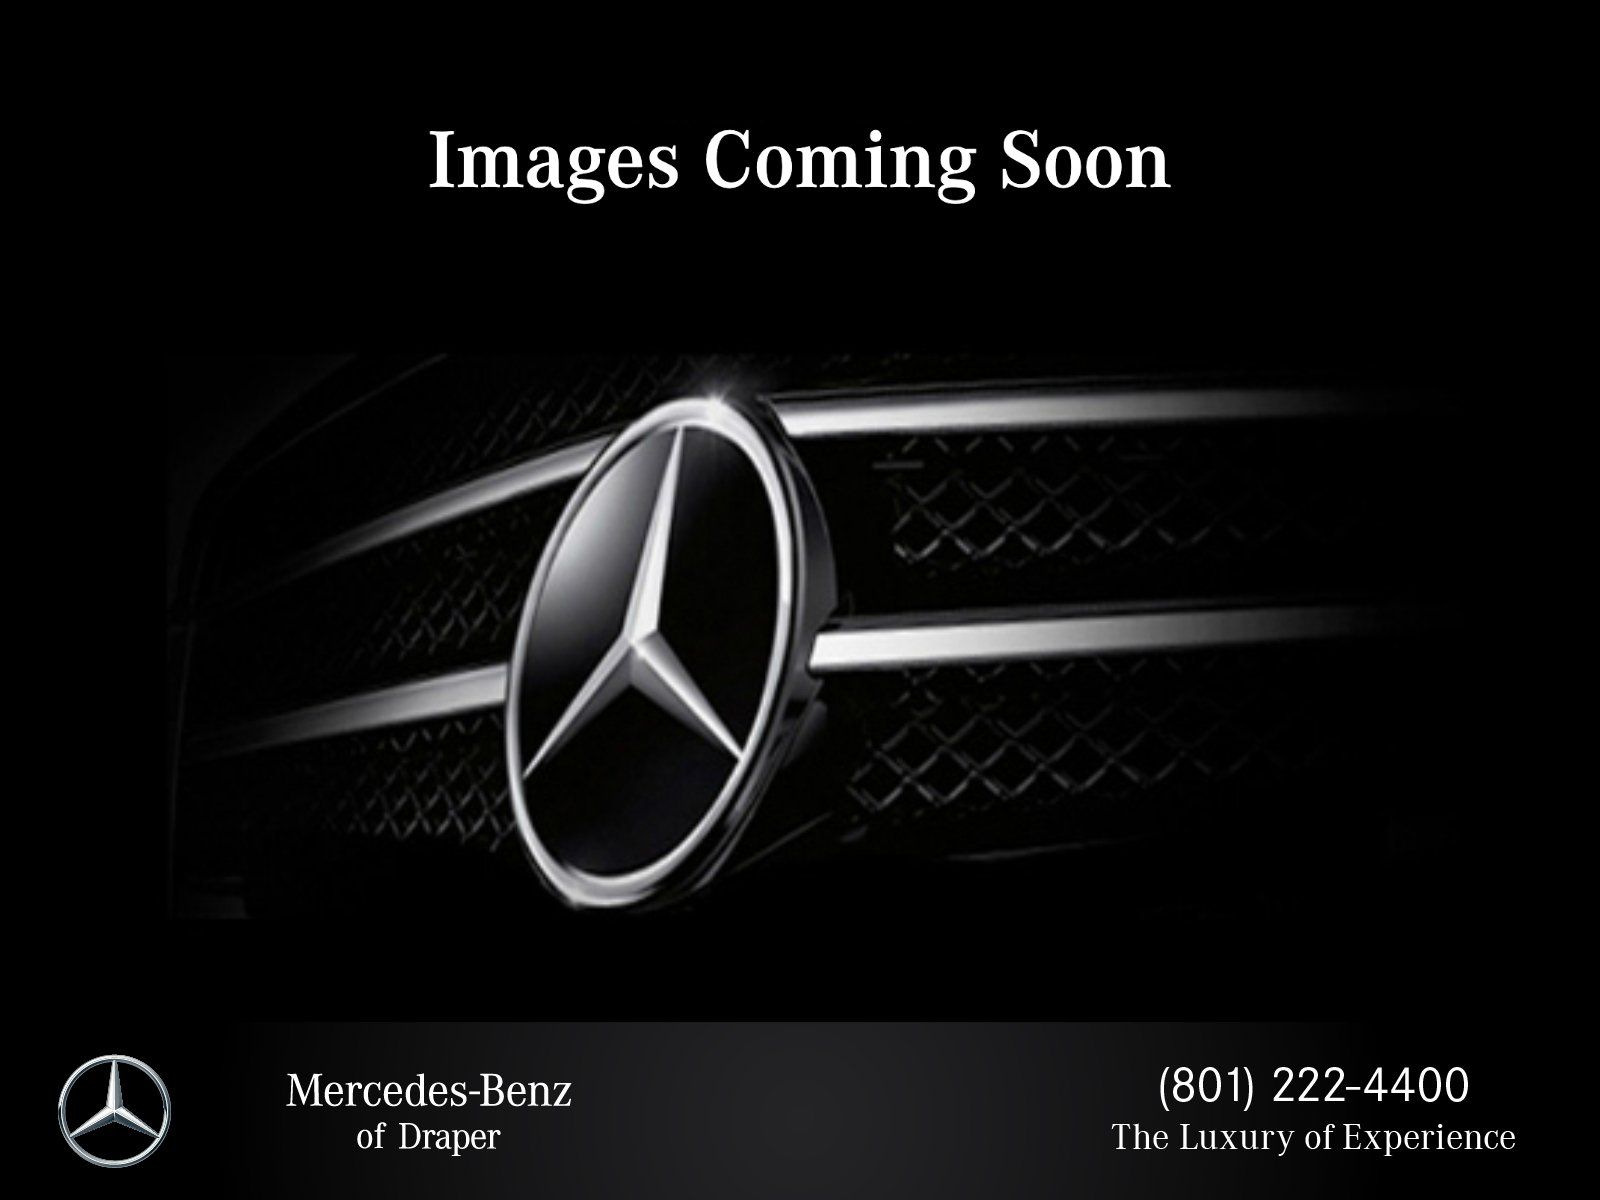 New 2021 Mercedes Benz Sprinter Crew Van Full Size Cargo Van In Draper #MT060079. Mercedes Benz Of Draper